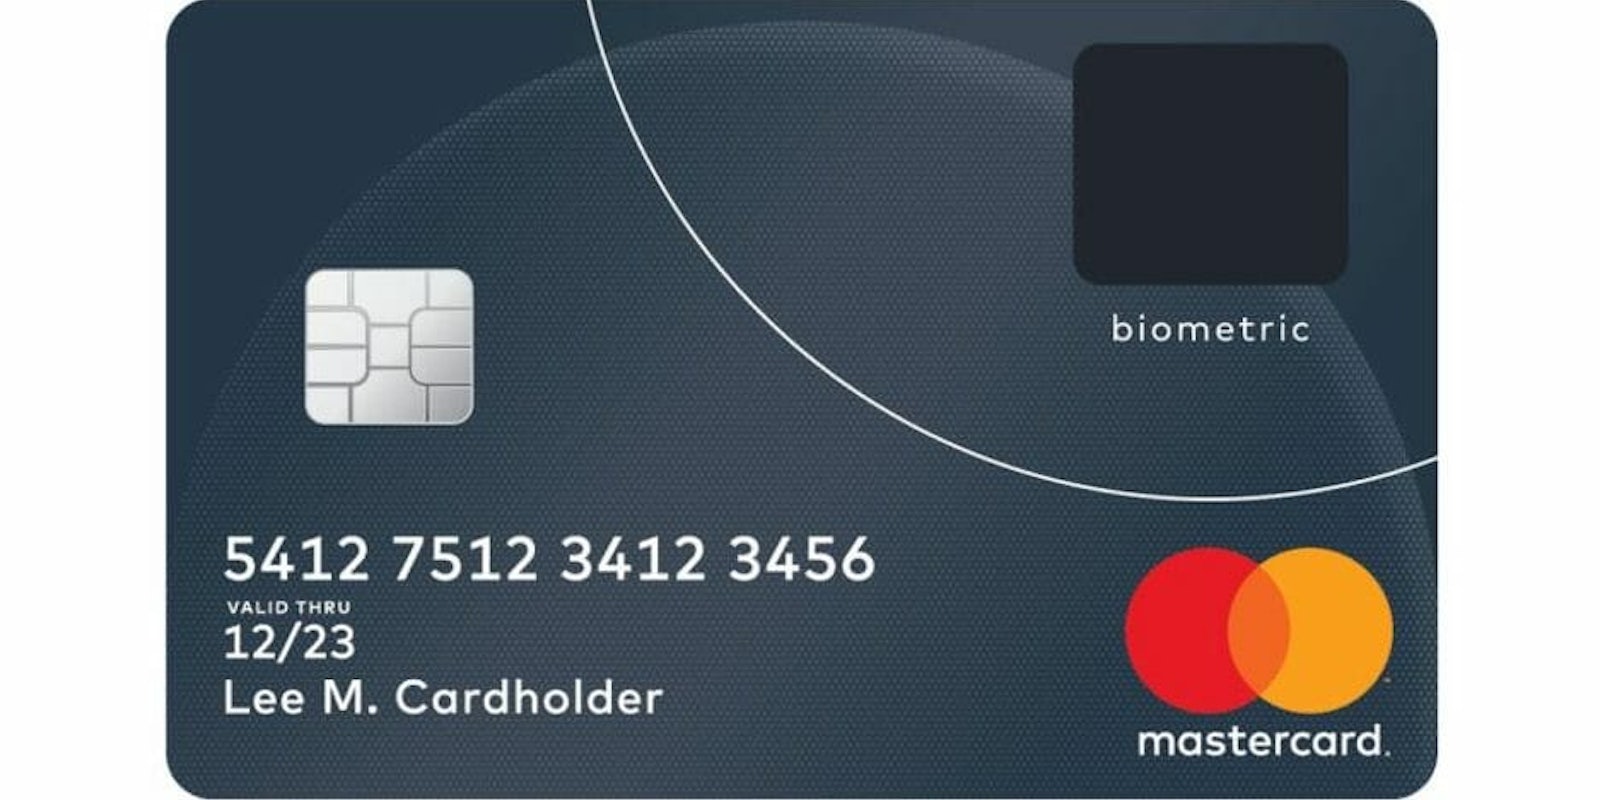 mastercard credit card fingerprint reader